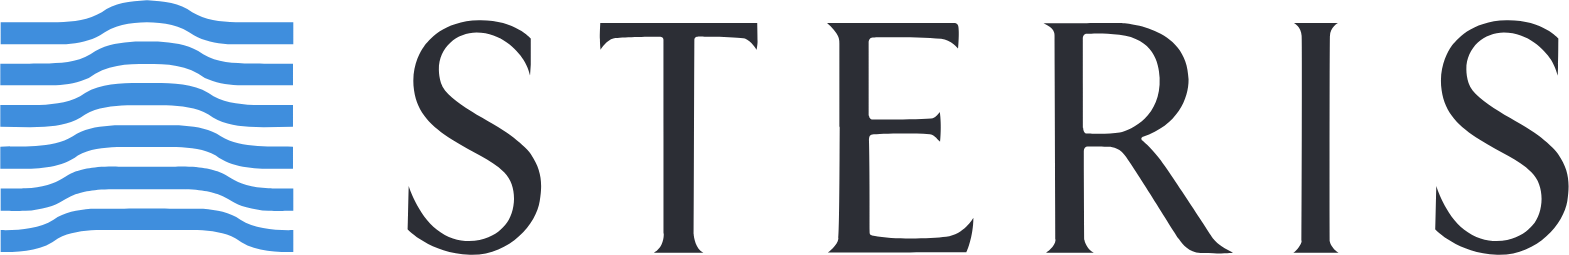 Steris logo large (transparent PNG)